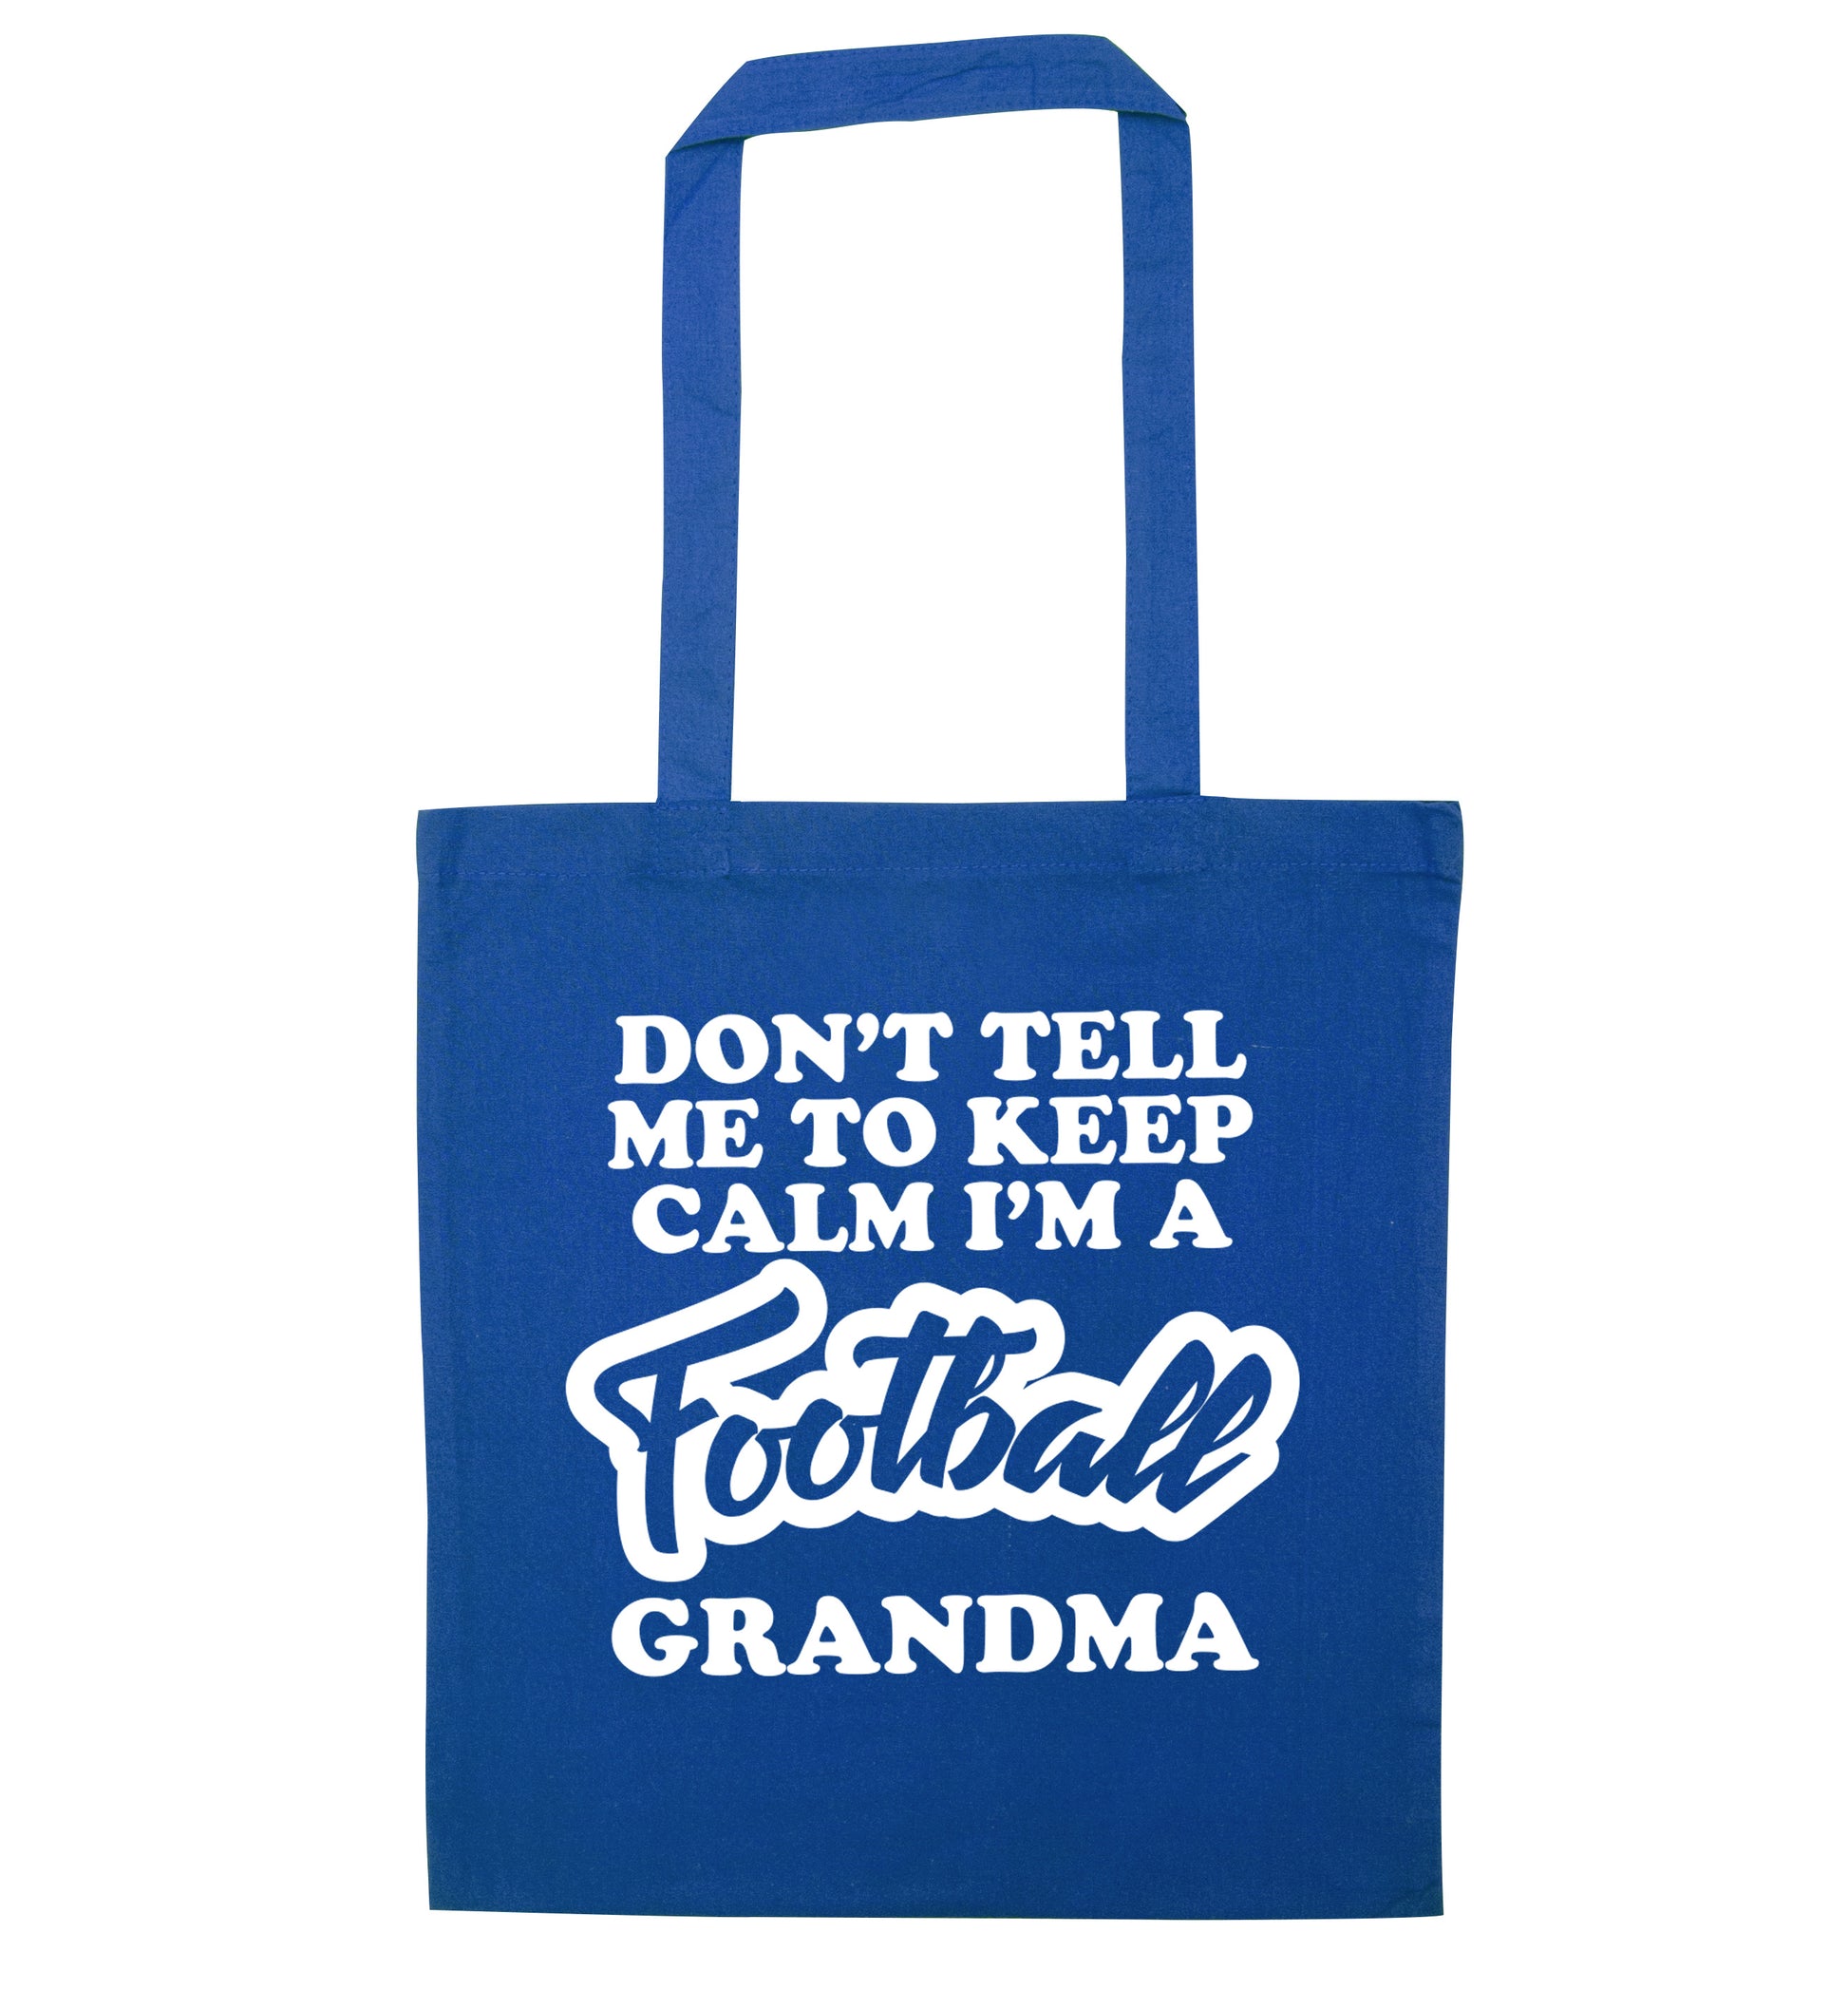 Don't tell me to keep calm I'm a football grandma blue tote bag